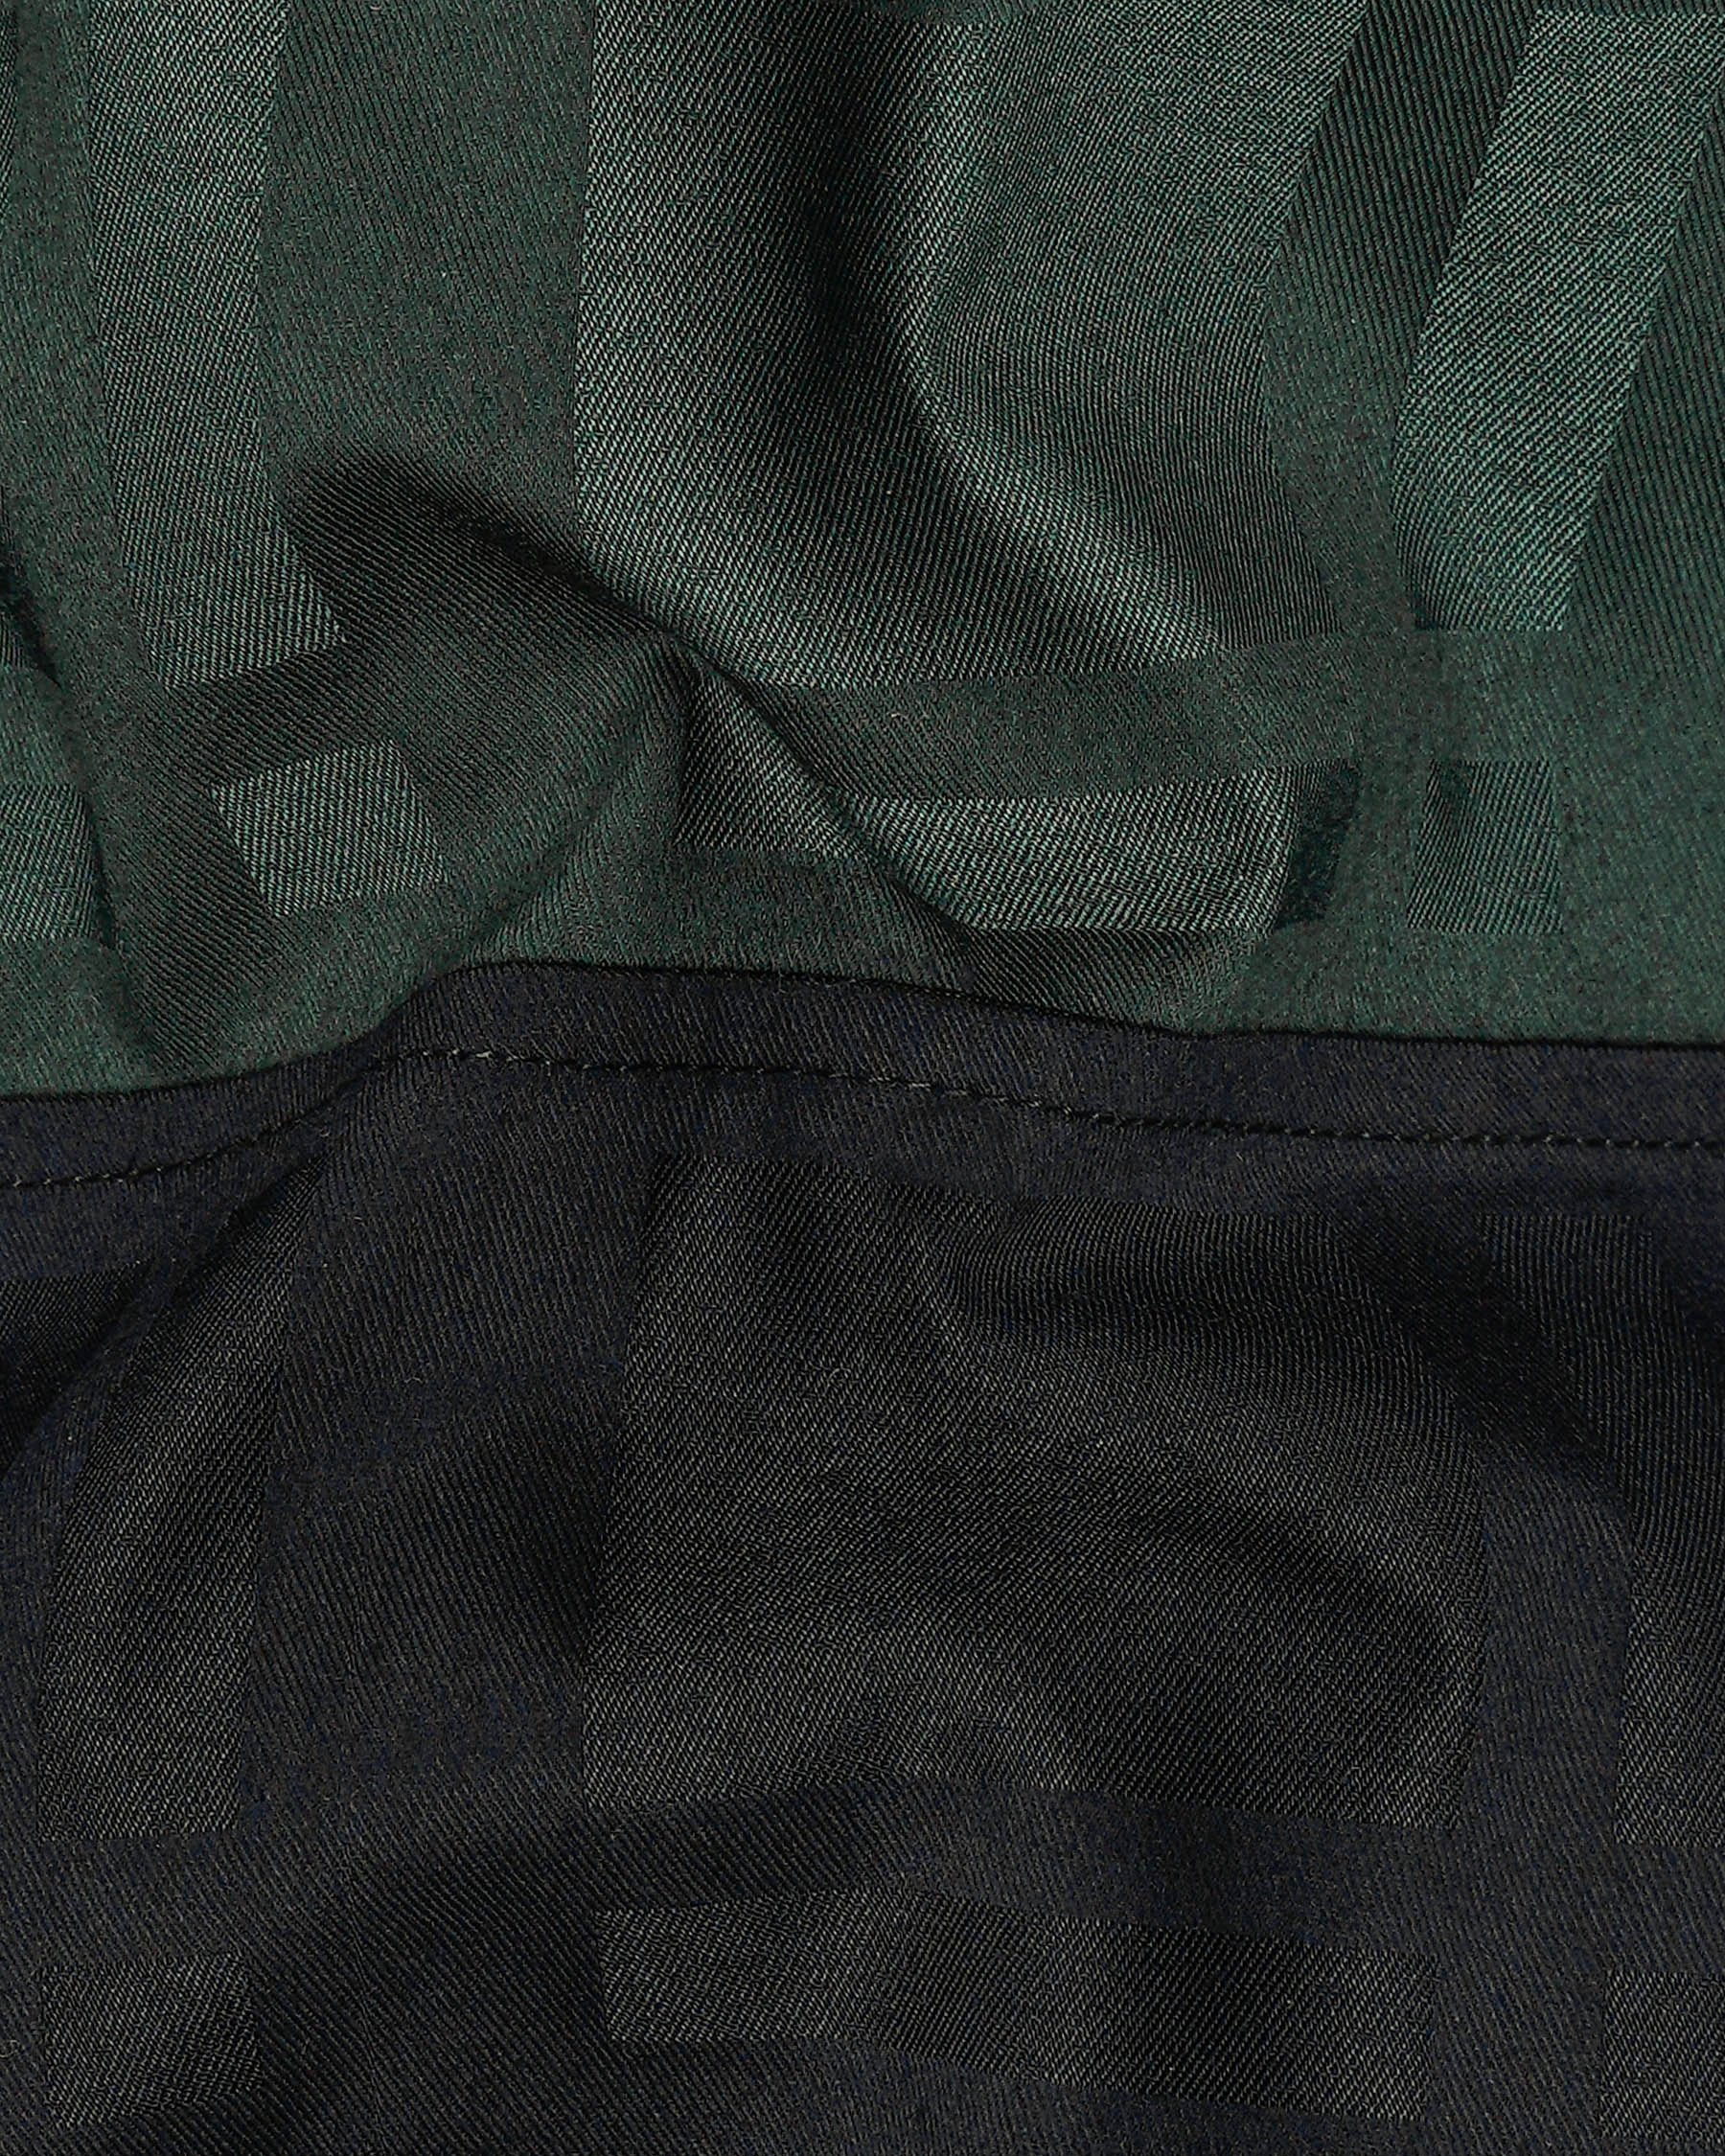 Corduroy Green With Jade Black 3D Plaid Dobby Textured Giza Cotton Designer Shirt 8011-CA-P102-38, 8011-CA-P102-H-38, 8011-CA-P102-39, 8011-CA-P102-H-39, 8011-CA-P102-40, 8011-CA-P102-H-40, 8011-CA-P102-42, 8011-CA-P102-H-42, 8011-CA-P102-44, 8011-CA-P102-H-44, 8011-CA-P102-46, 8011-CA-P102-H-46, 8011-CA-P102-48, 8011-CA-P102-H-48, 8011-CA-P102-50, 8011-CA-P102-H-50, 8011-CA-P102-52, 8011-CA-P102-H-52